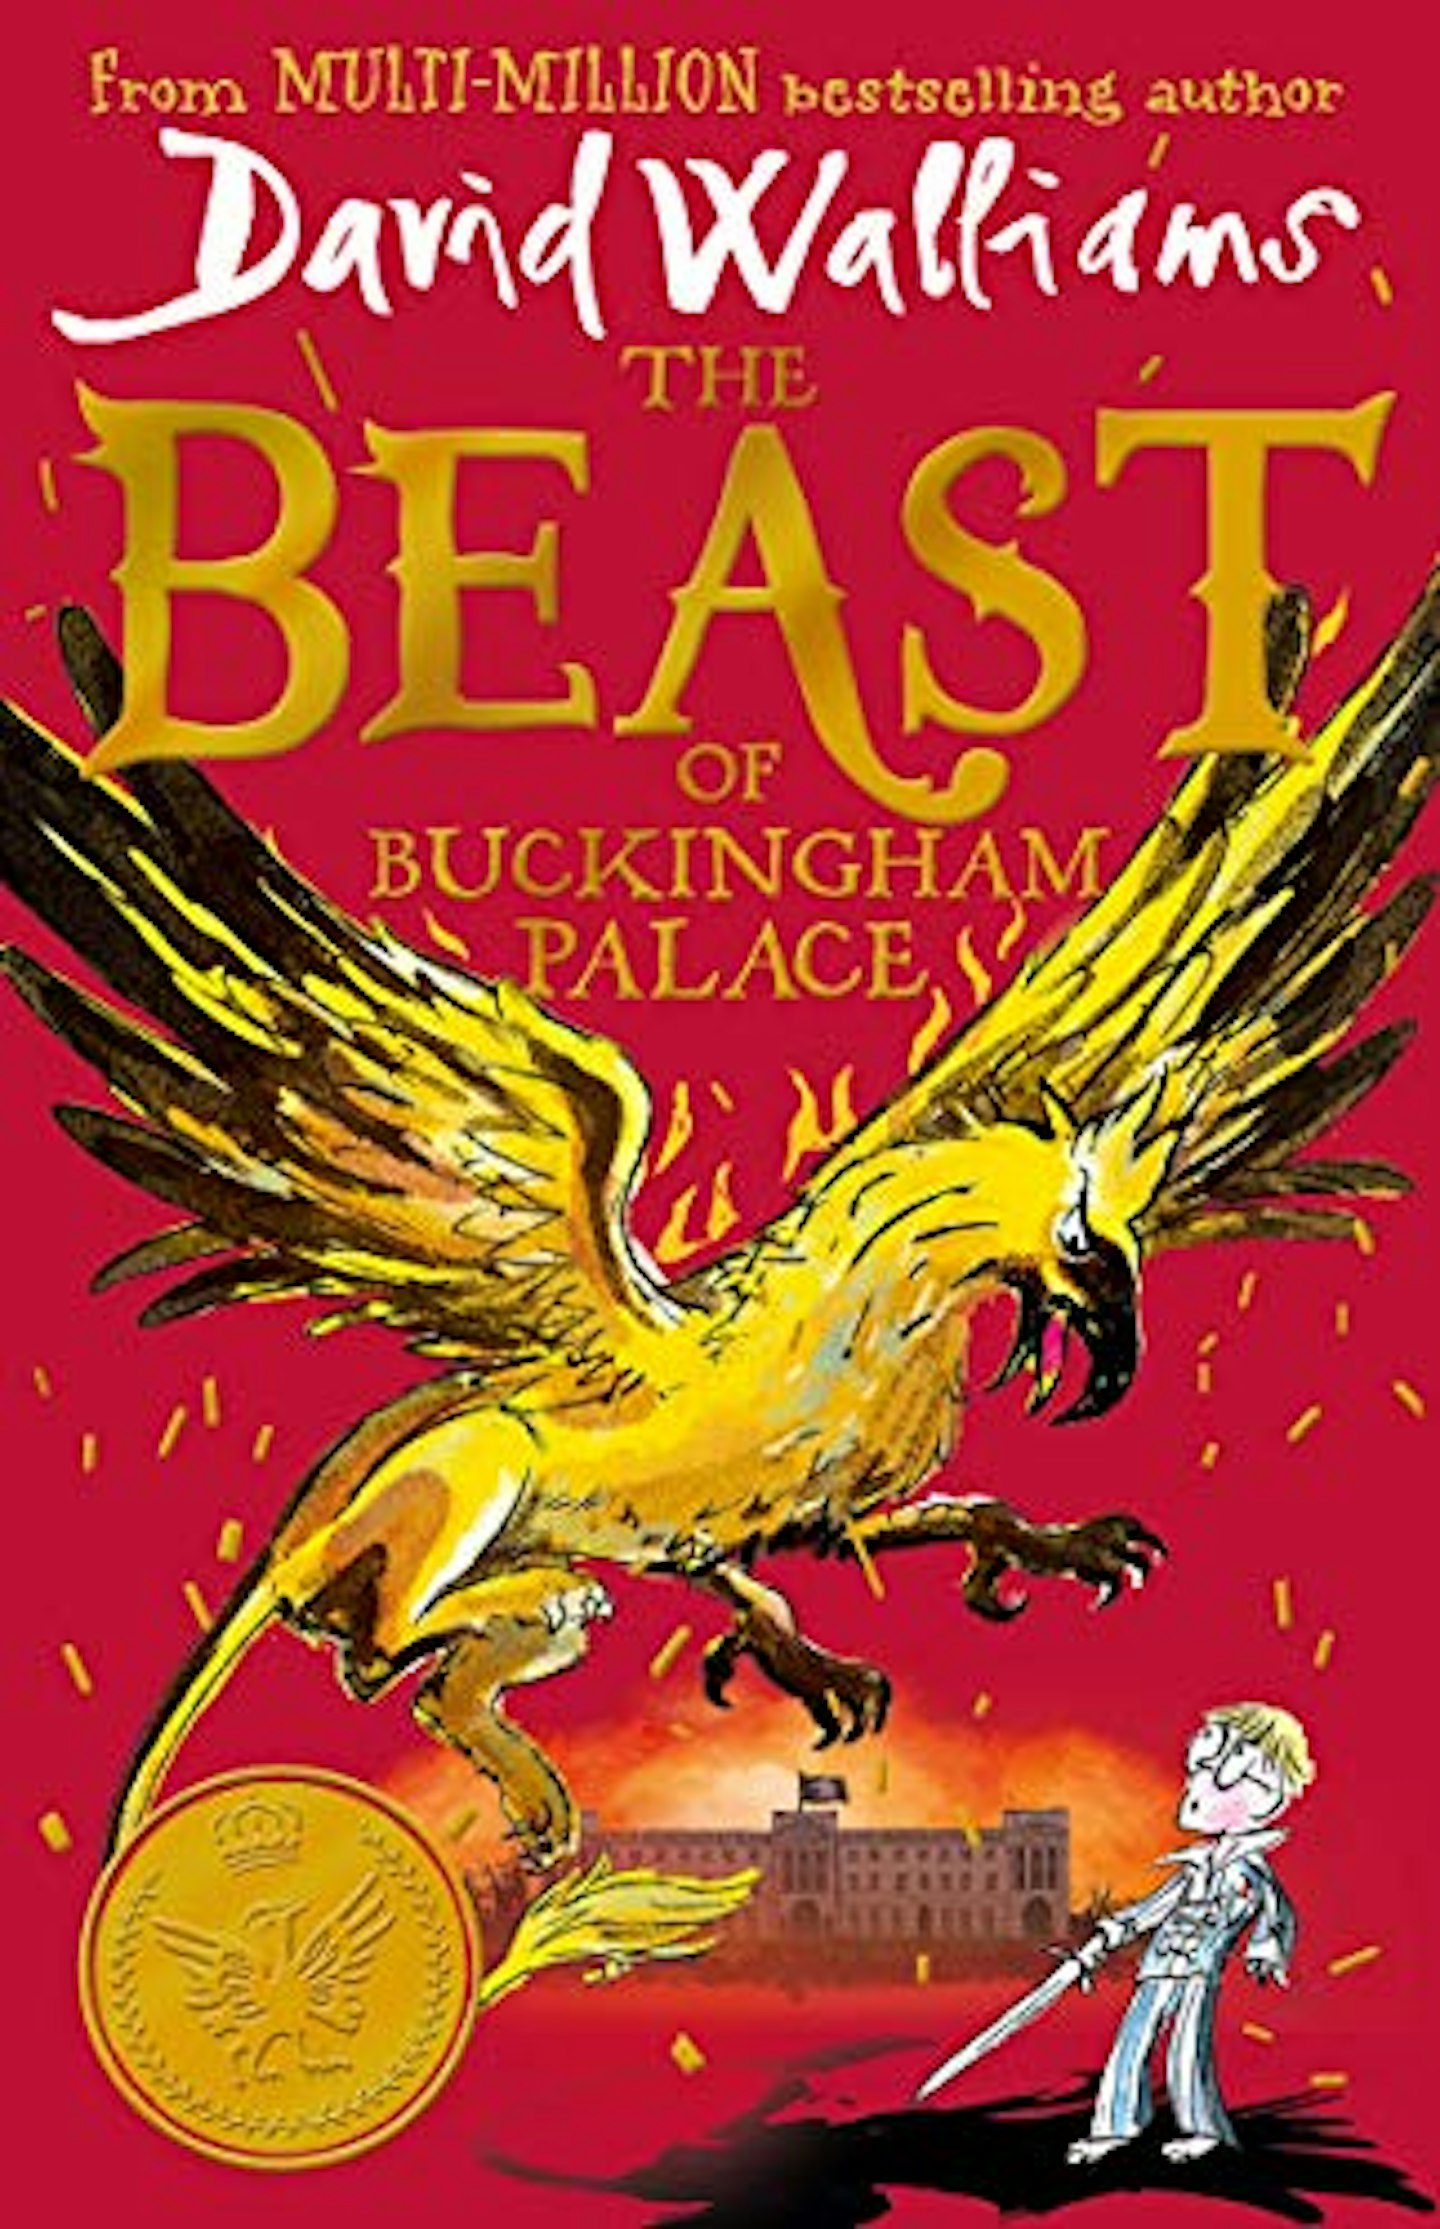 The Beast of Buckingham Palace by David Walliams 